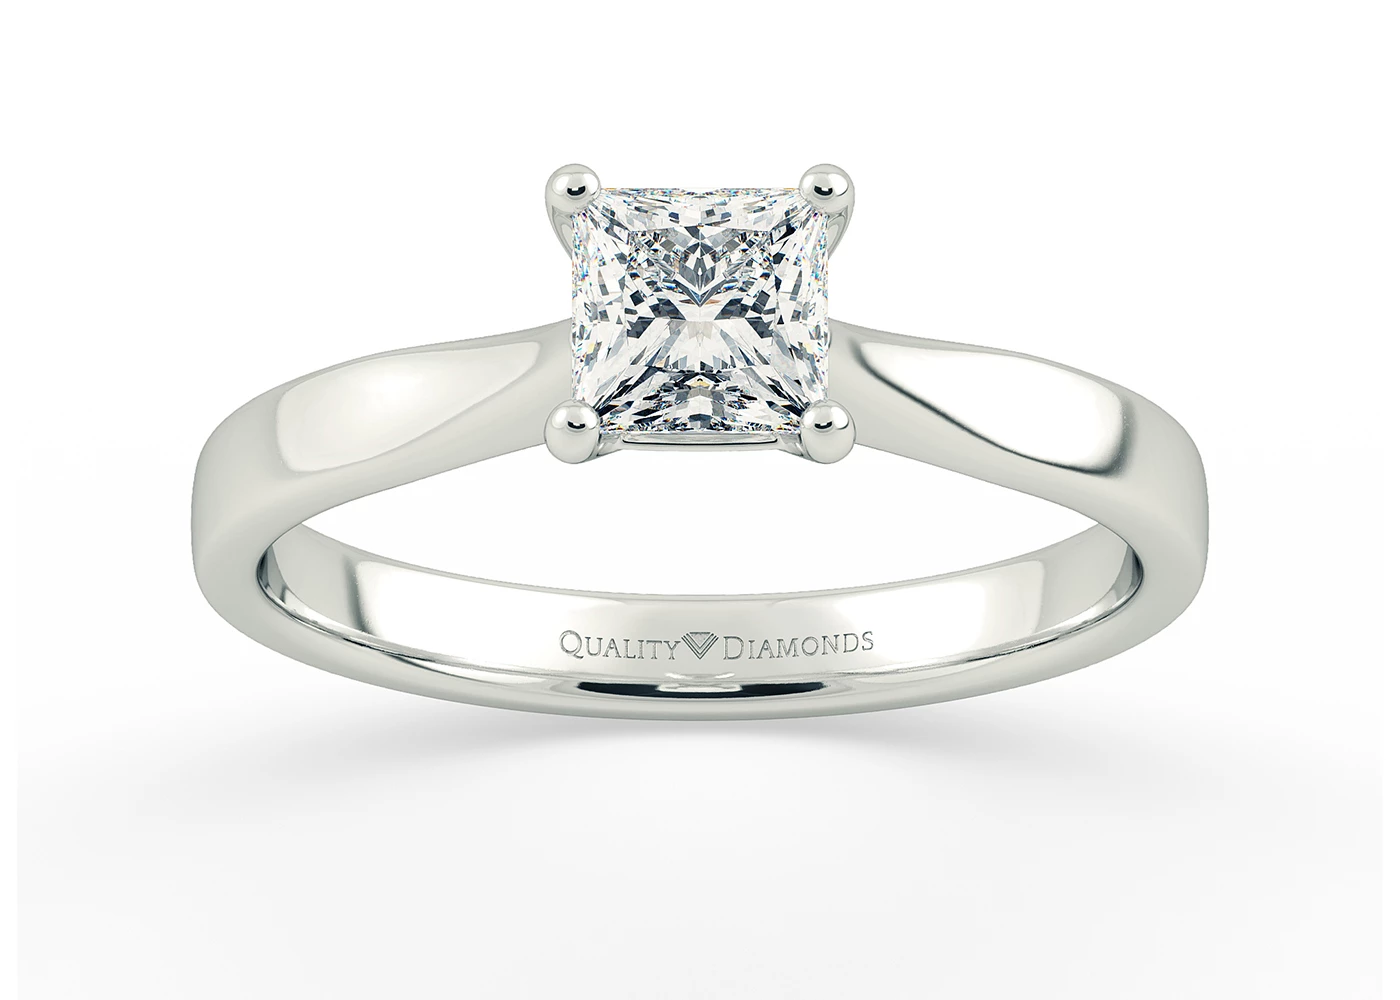 Princess Beau Diamond Ring in 9K White Gold